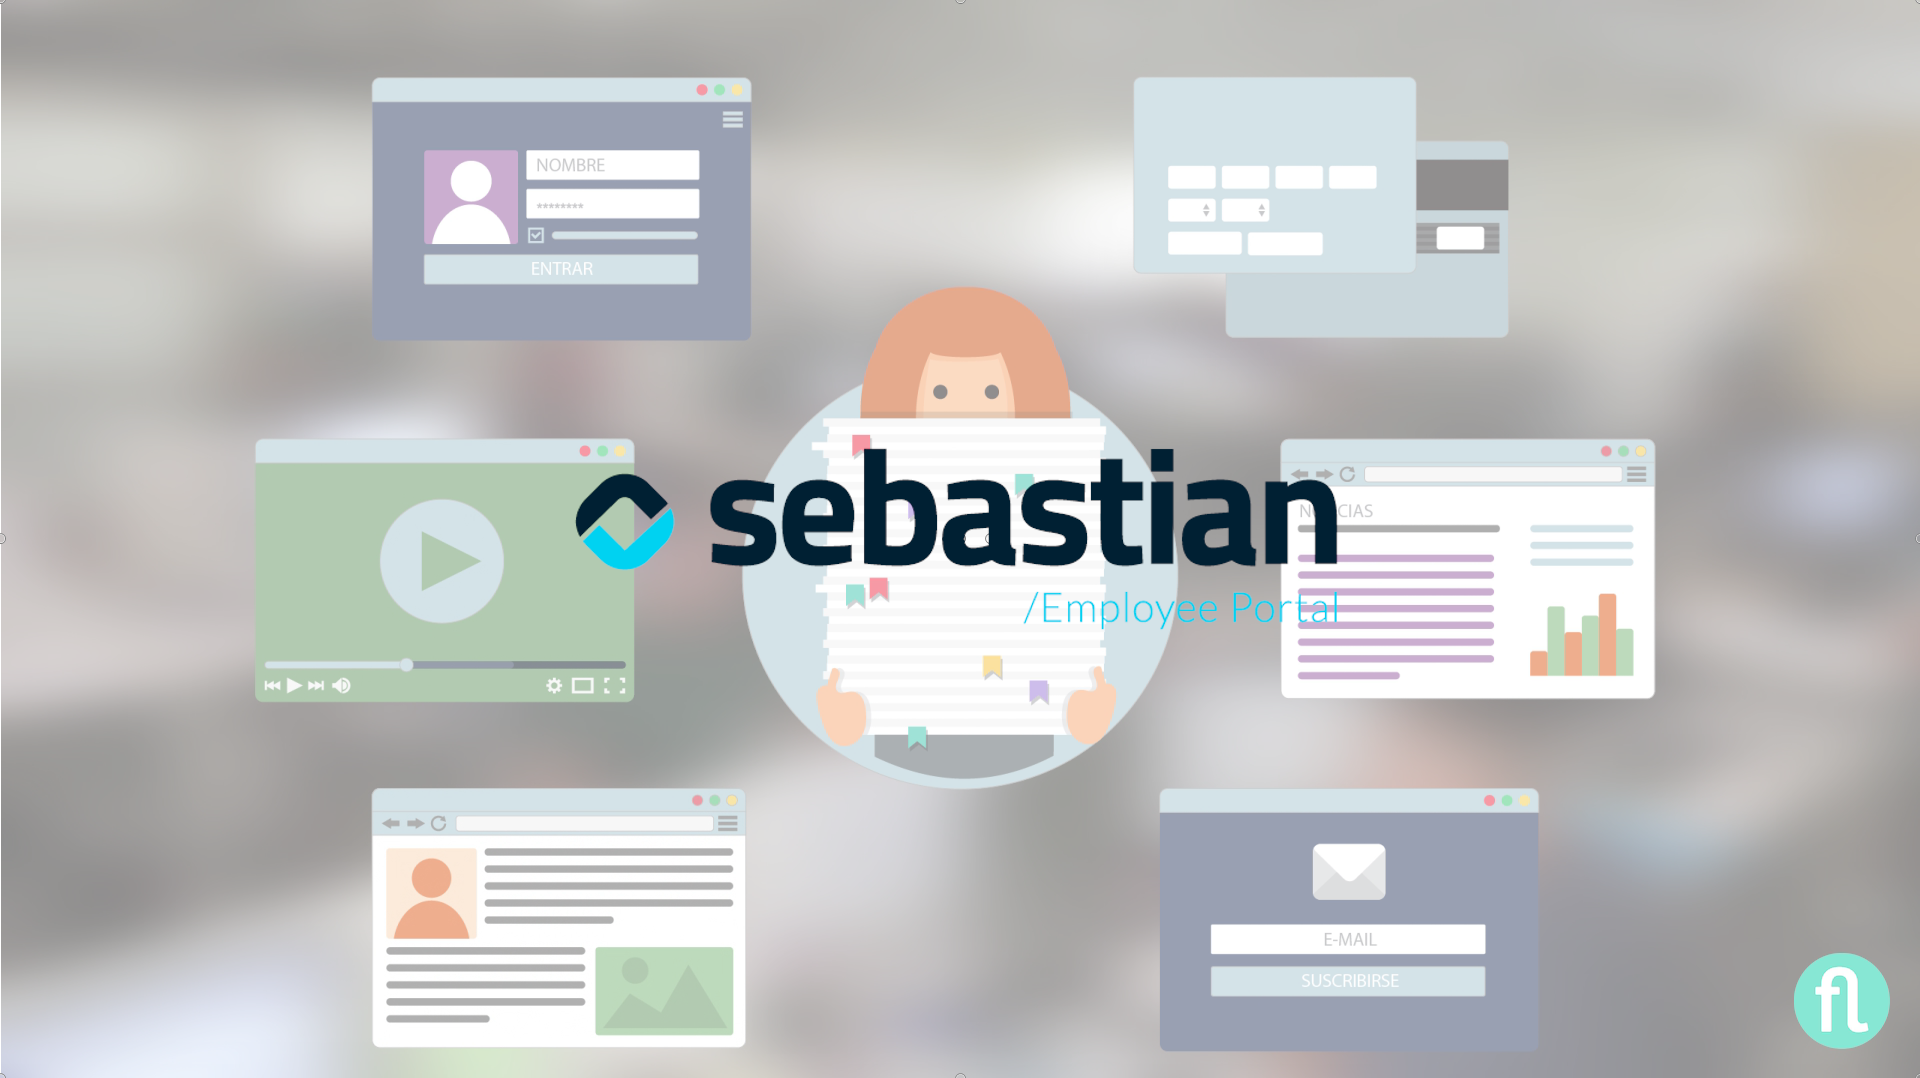 Sebastian employee portal